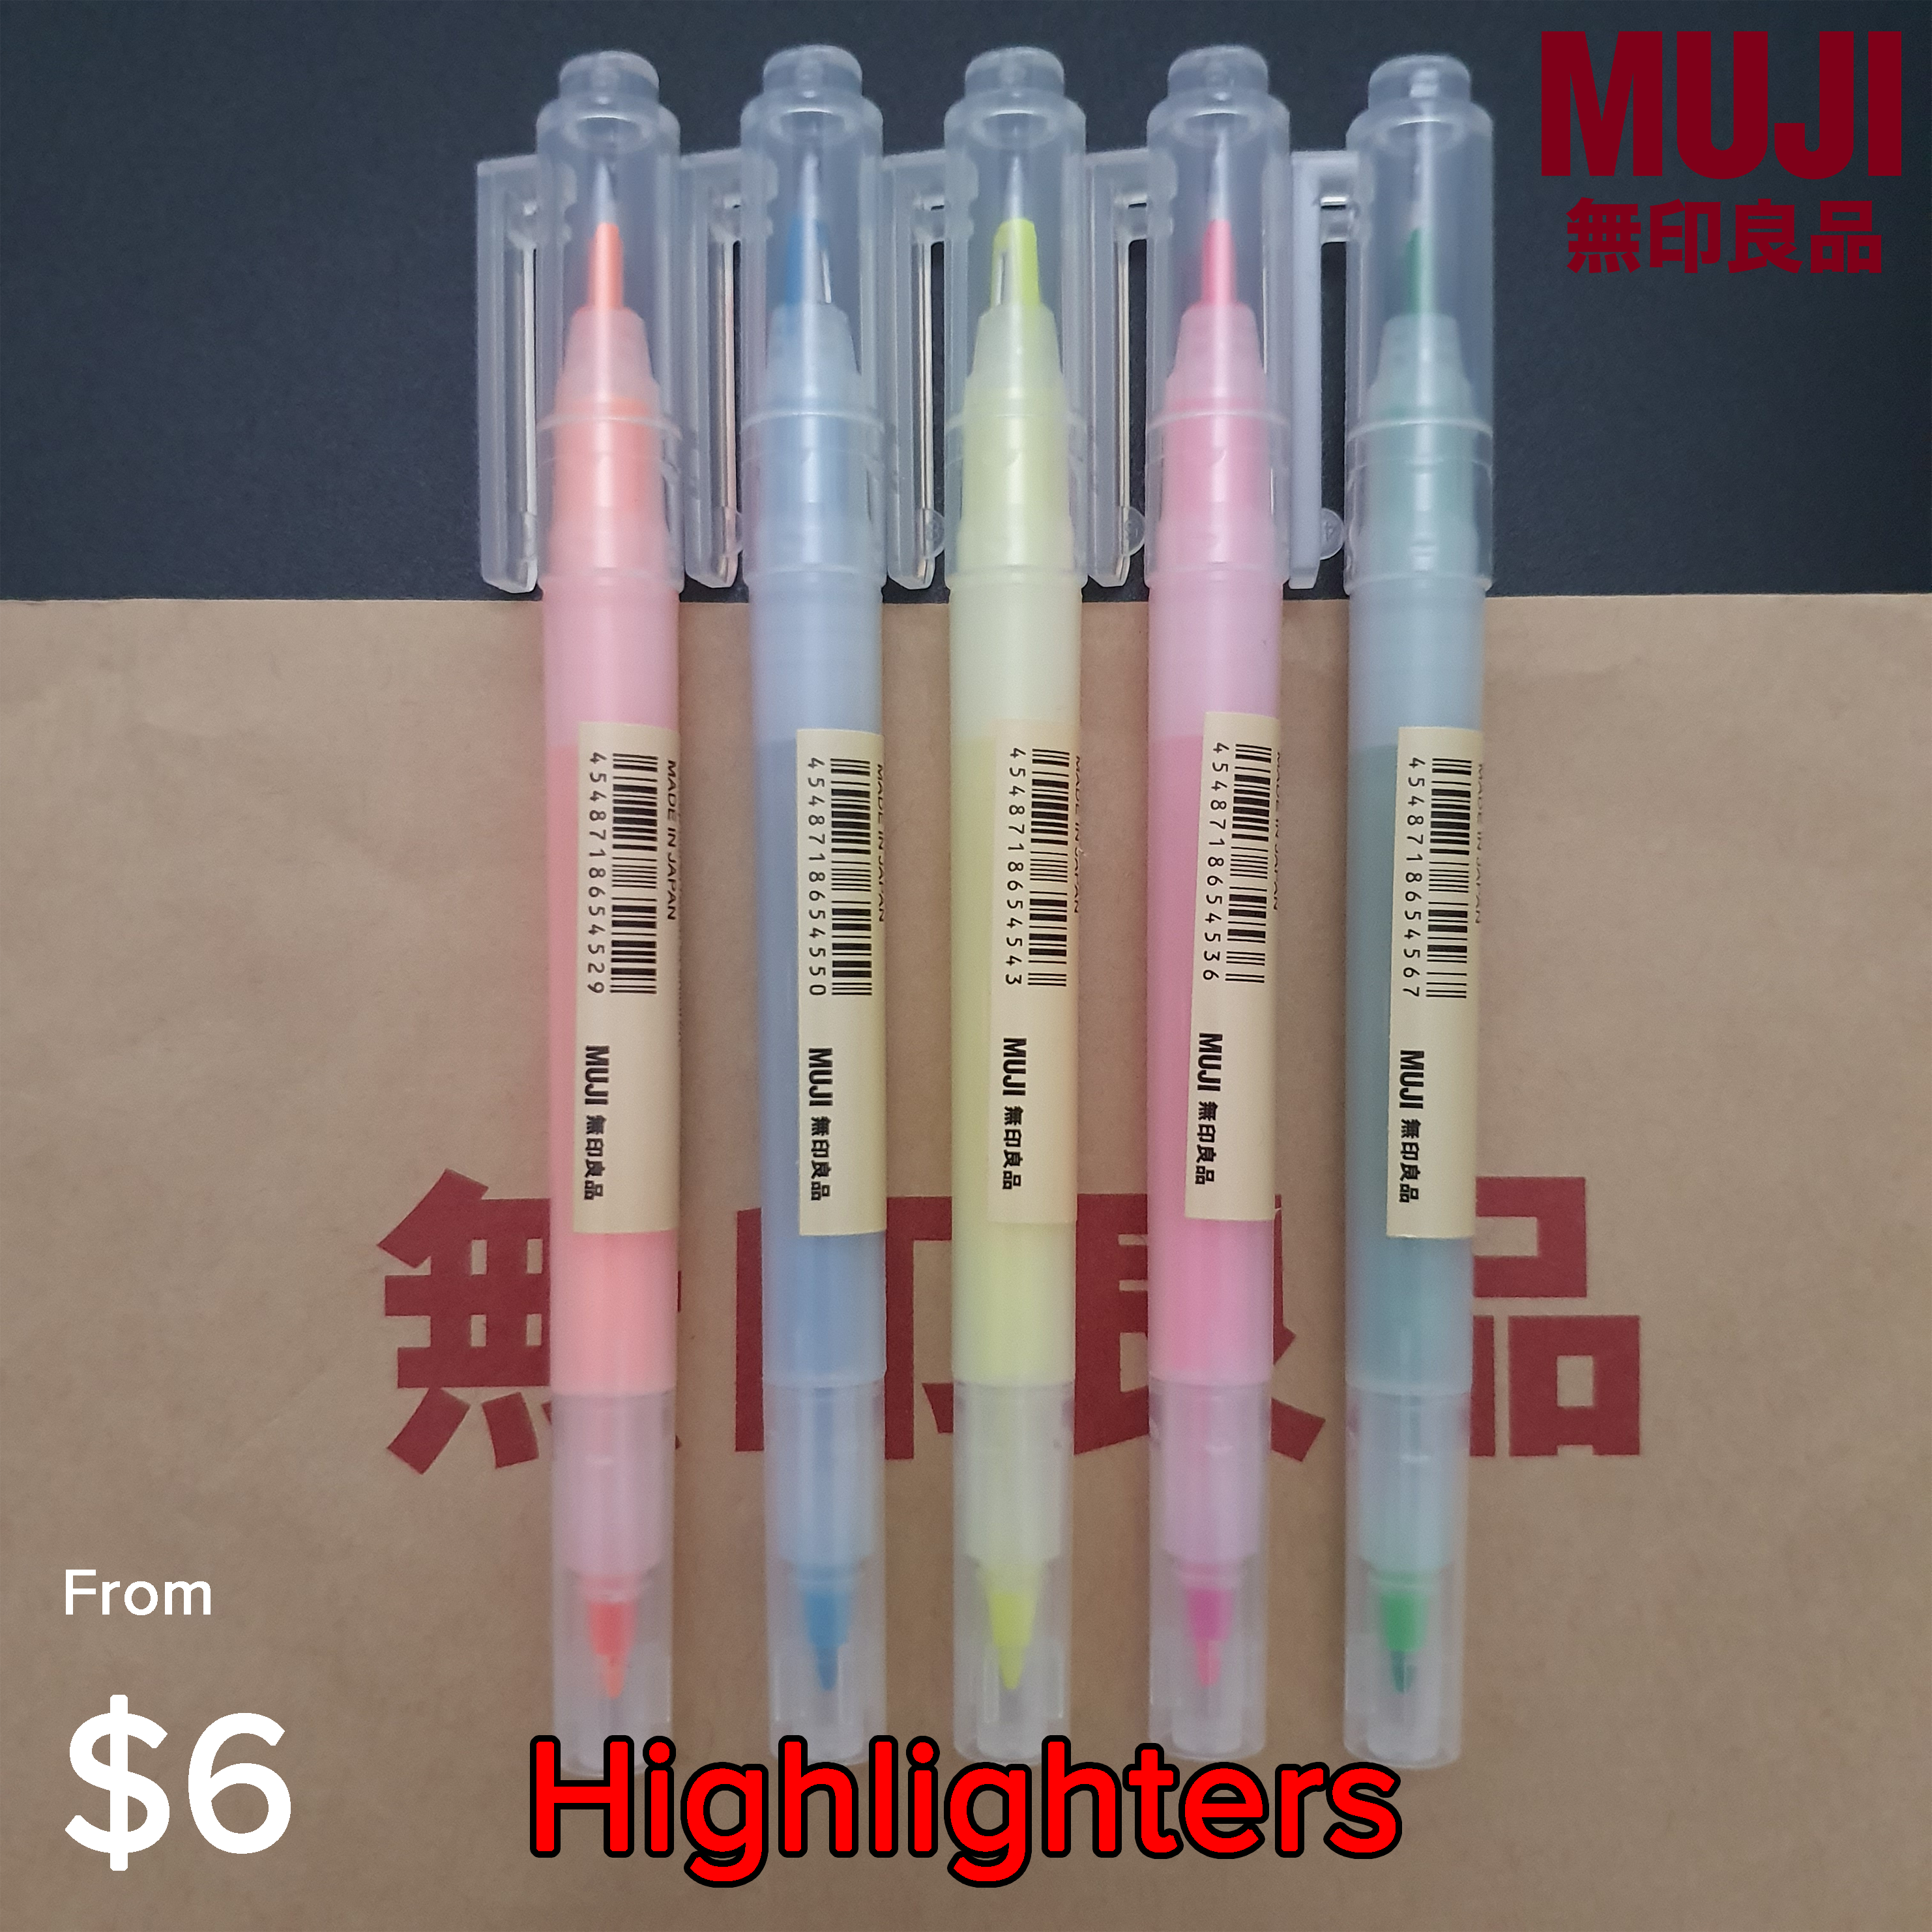 MUJI Highlighters | eBay